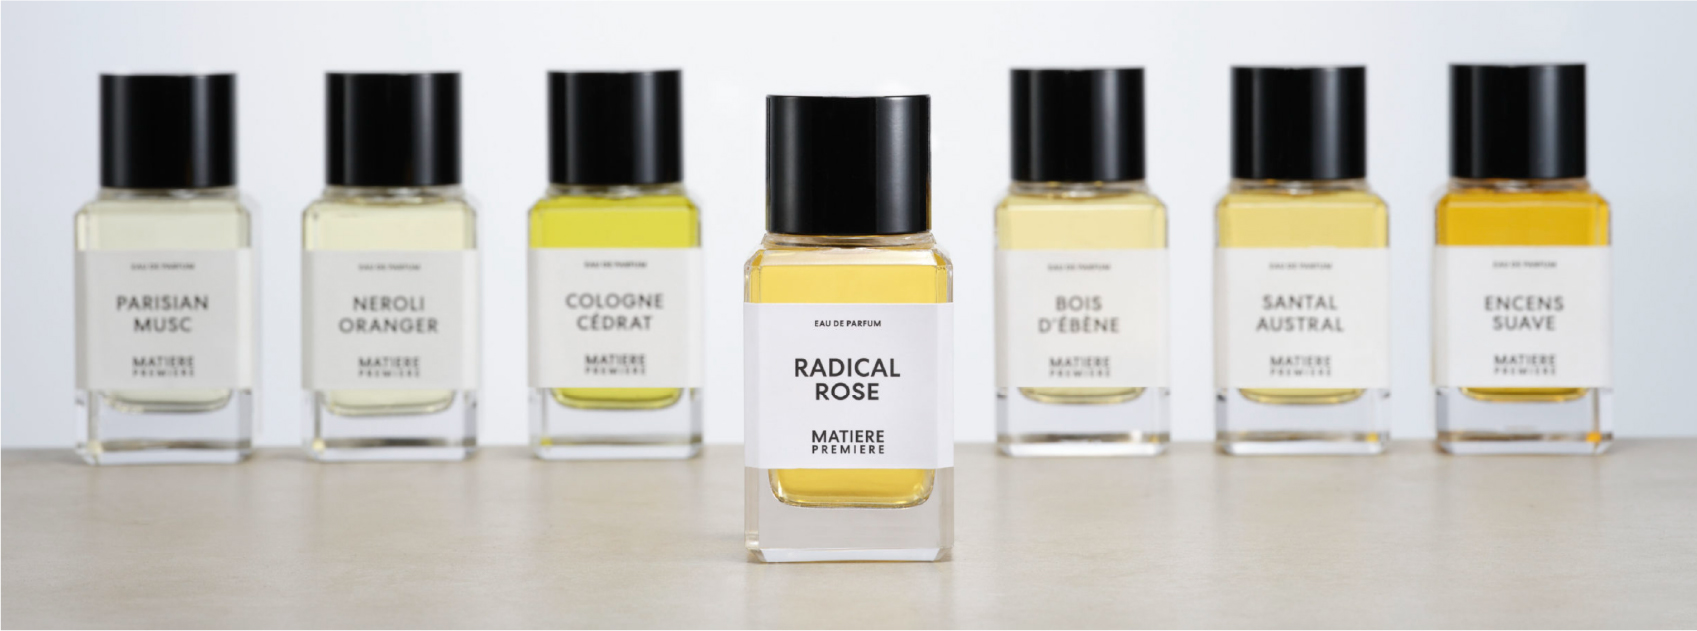 7 different fragrances by matiere premiere